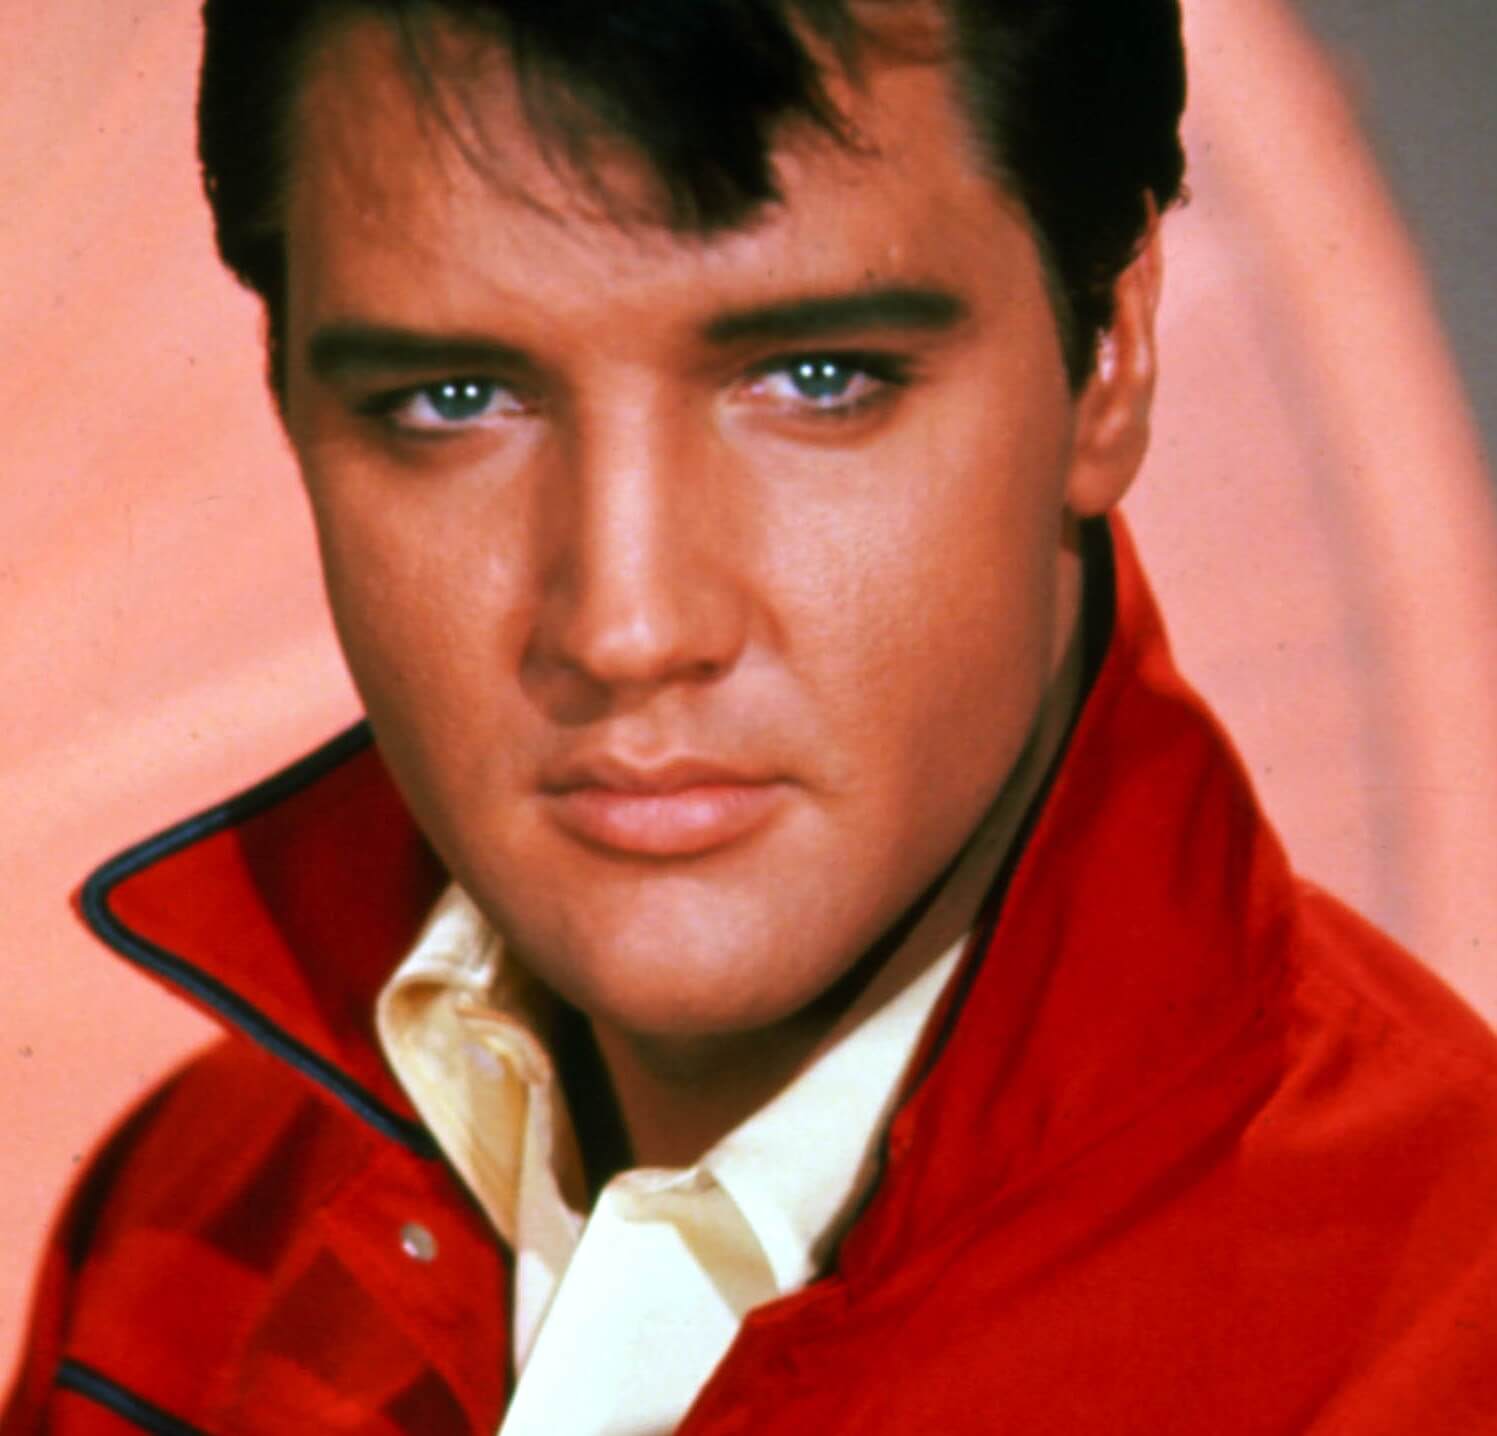 "Blue Suede Shoes" singer Elvis Presley wearing red